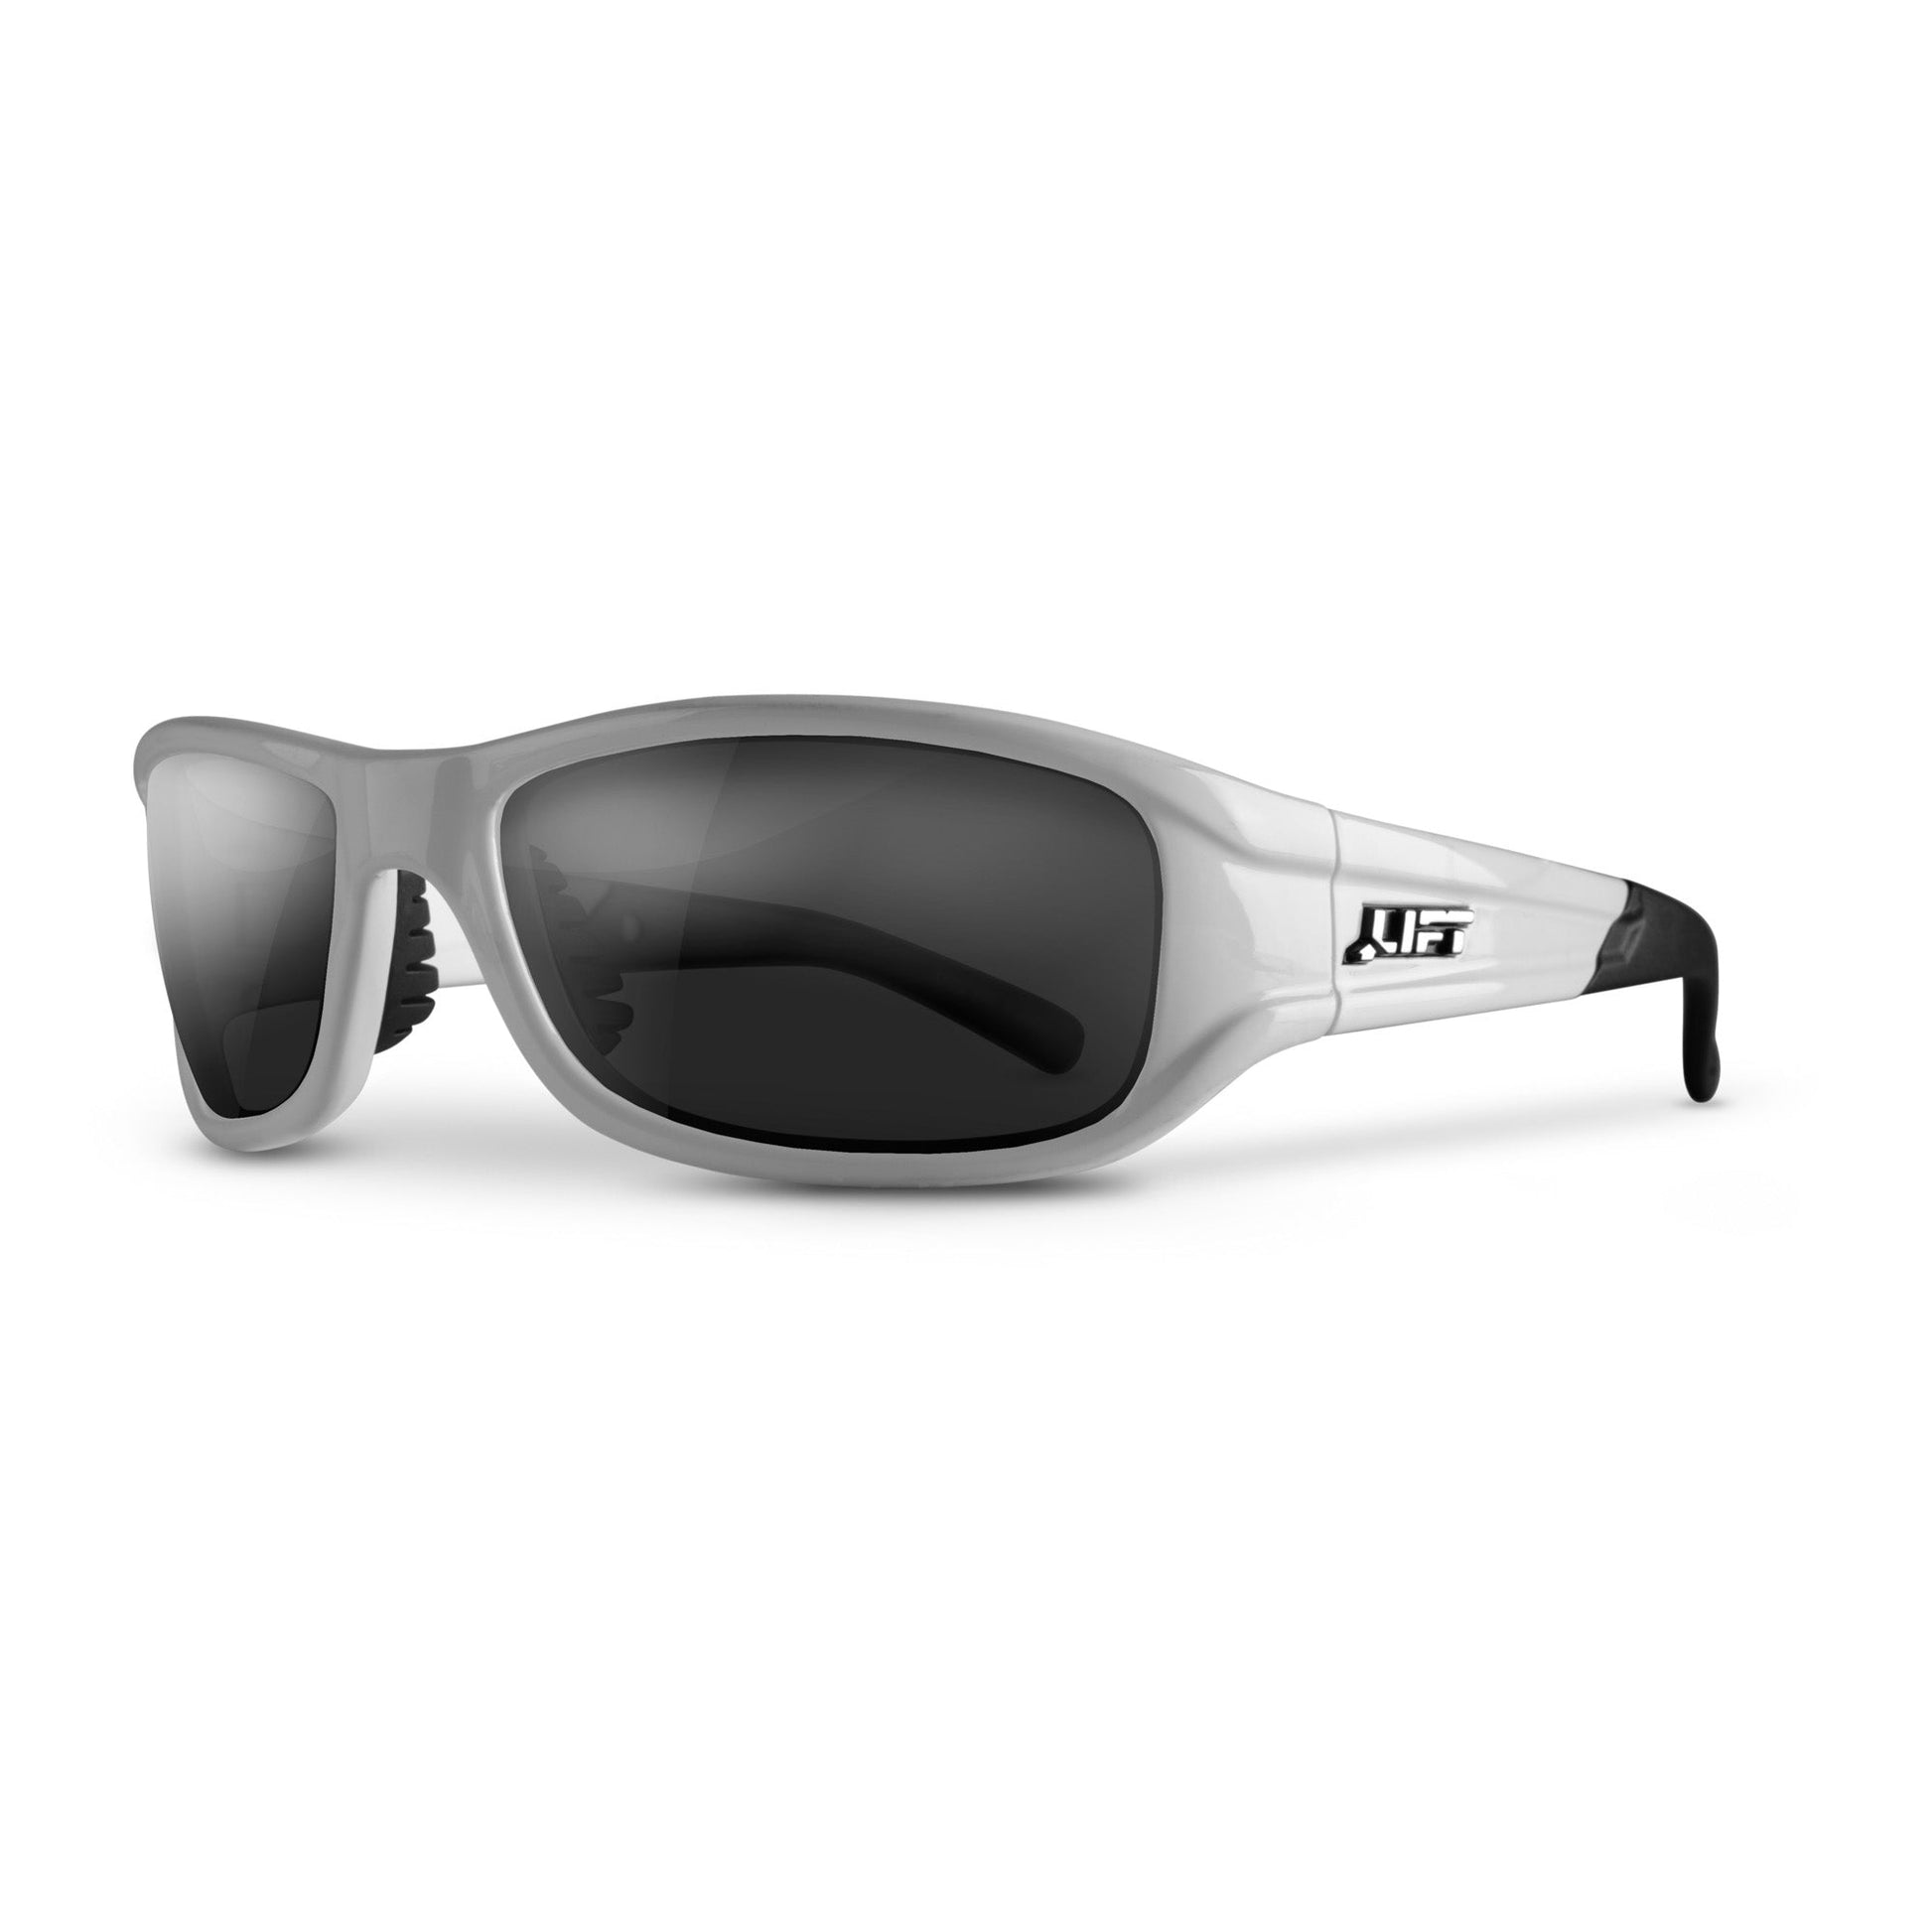 LIFT Safety - ALIAS Safety Glasses - White